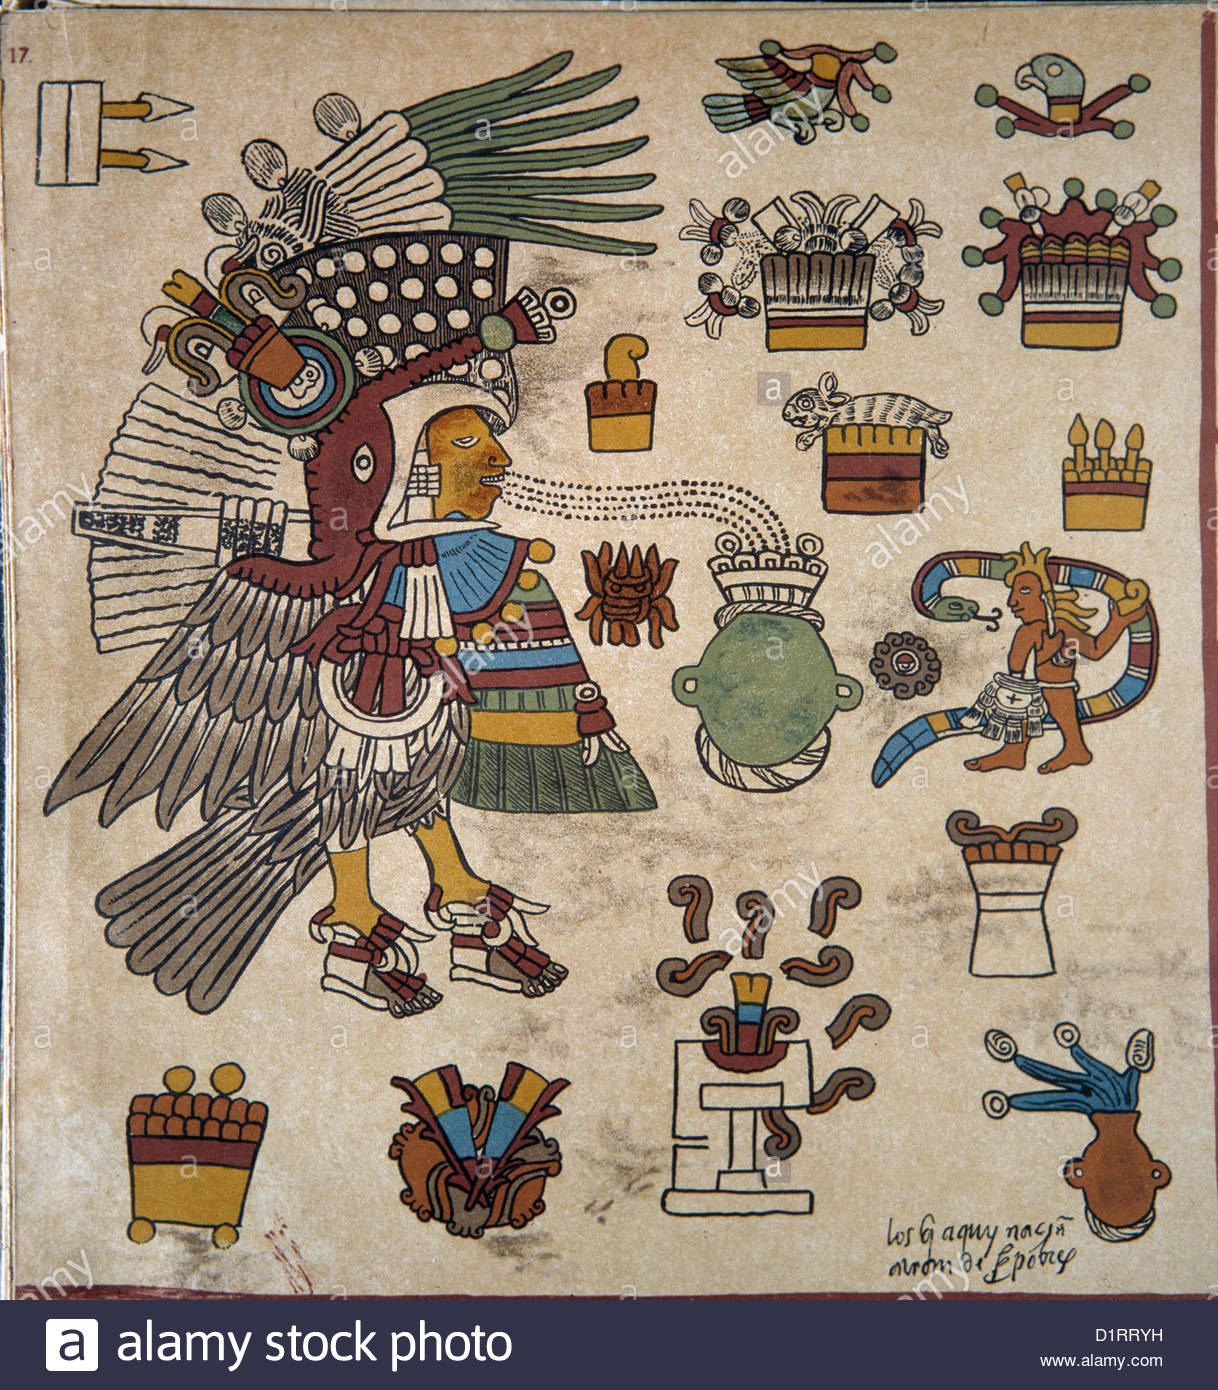 Aztec God Quetzalcoatl Stock Photos & Aztec God Quetzalcoatl Stock ...